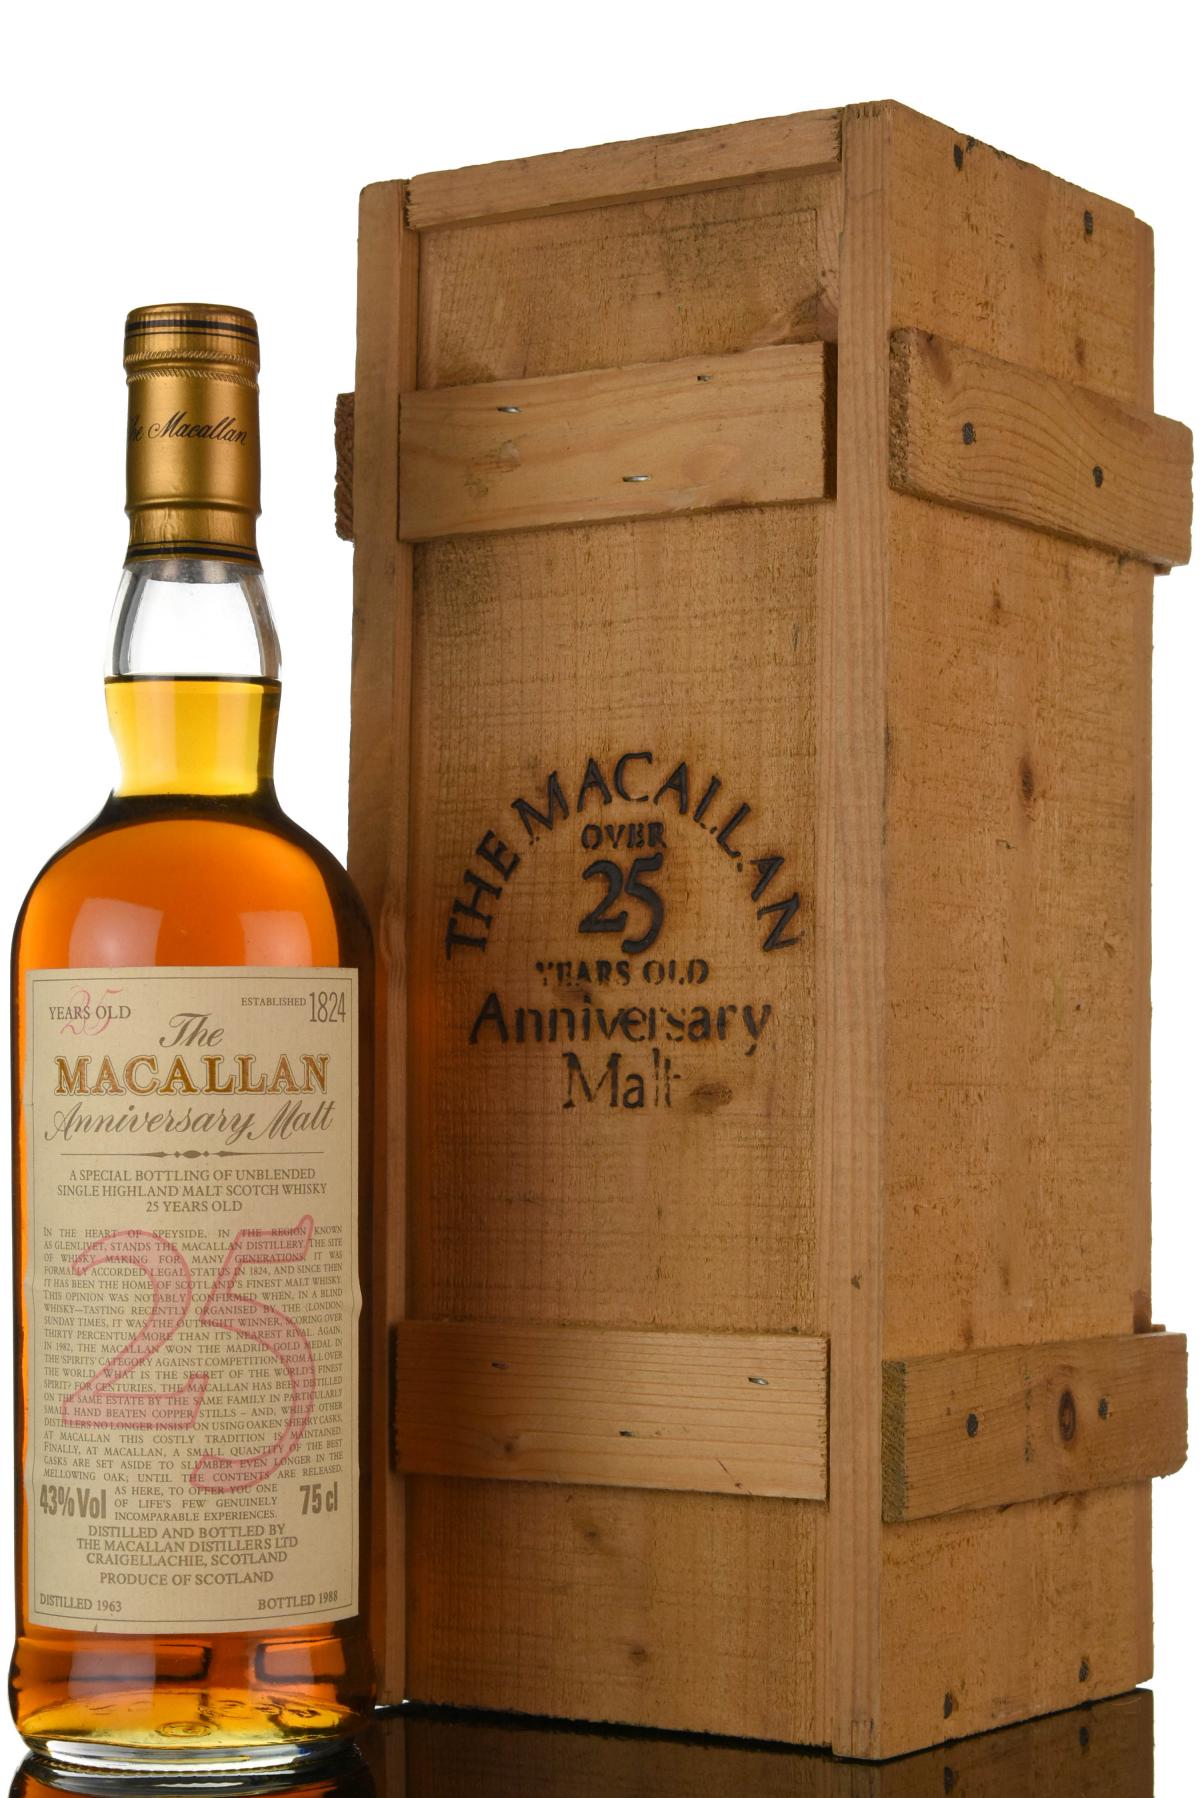 Macallan 1963-1988 - 25 Year Old Anniversary Malt